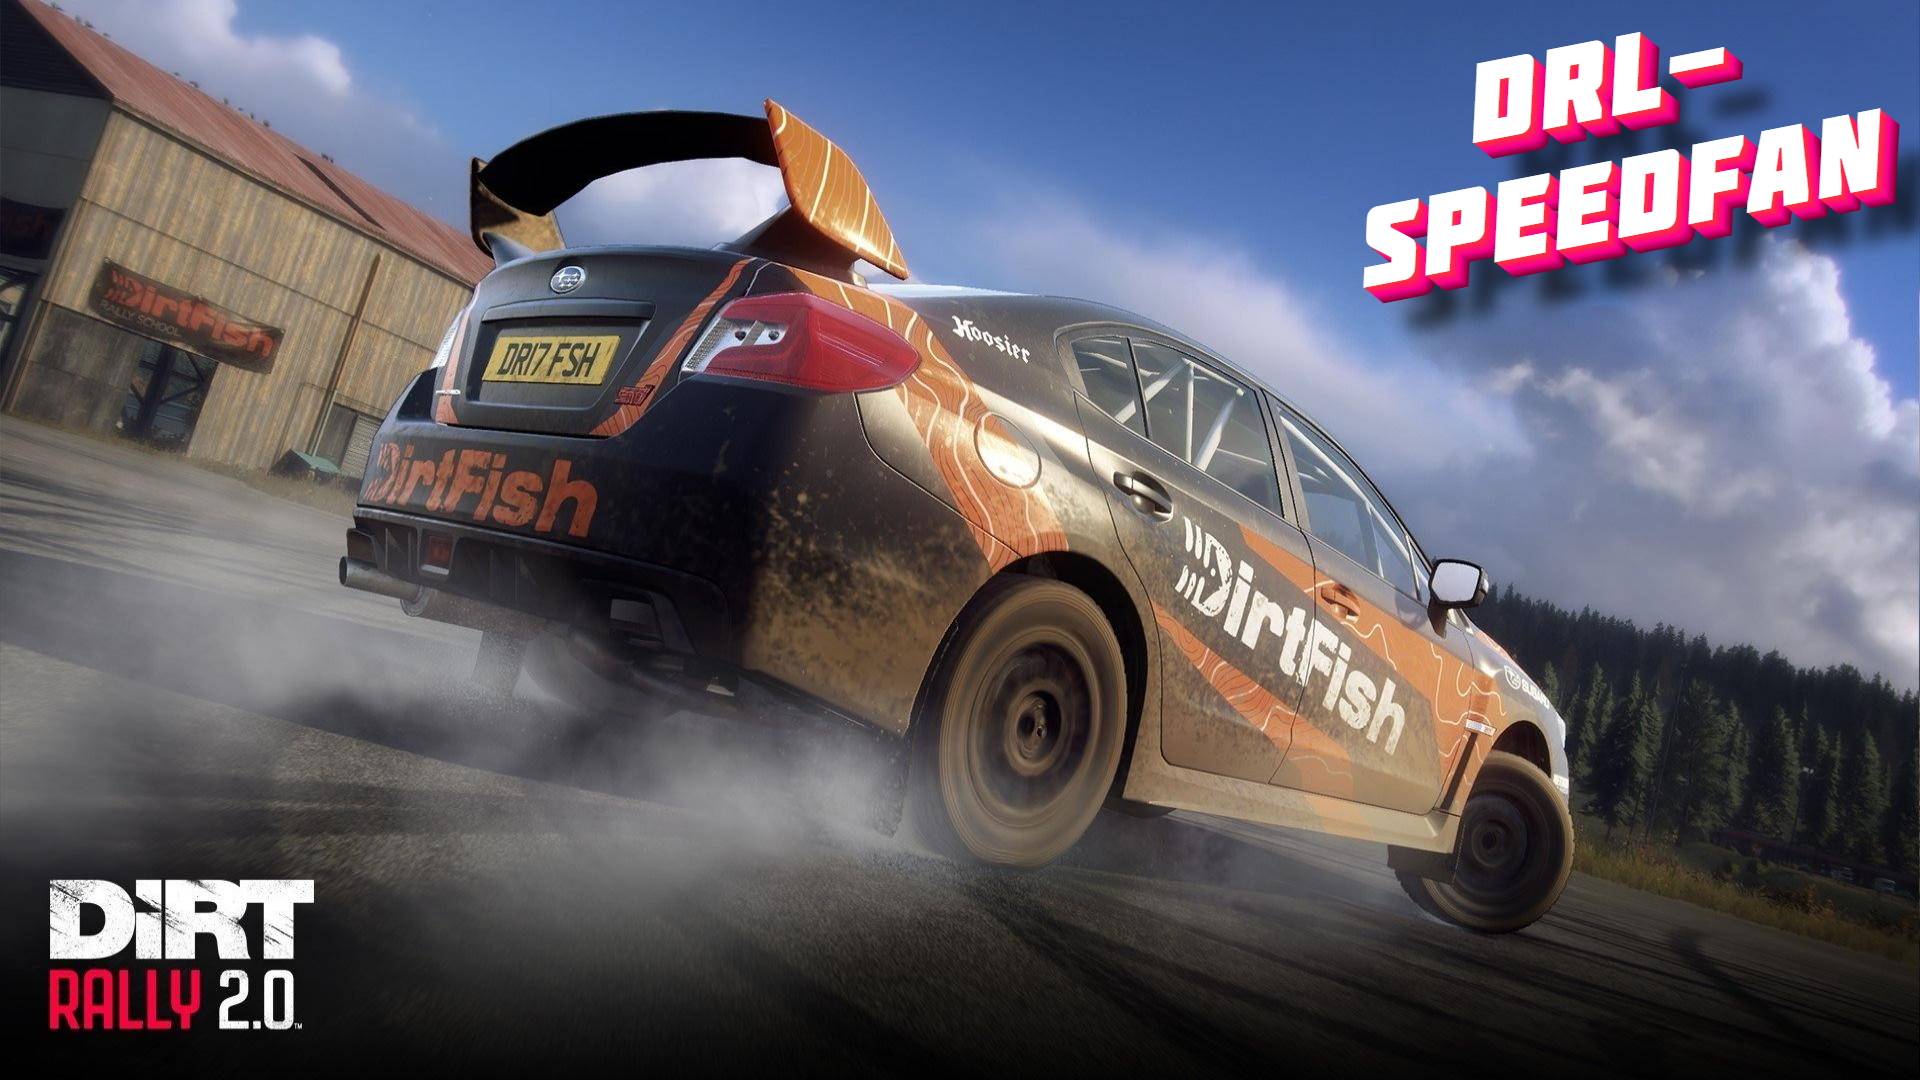 DRL-SpeedFAN 2.016 (Dirt Rally 2.0)